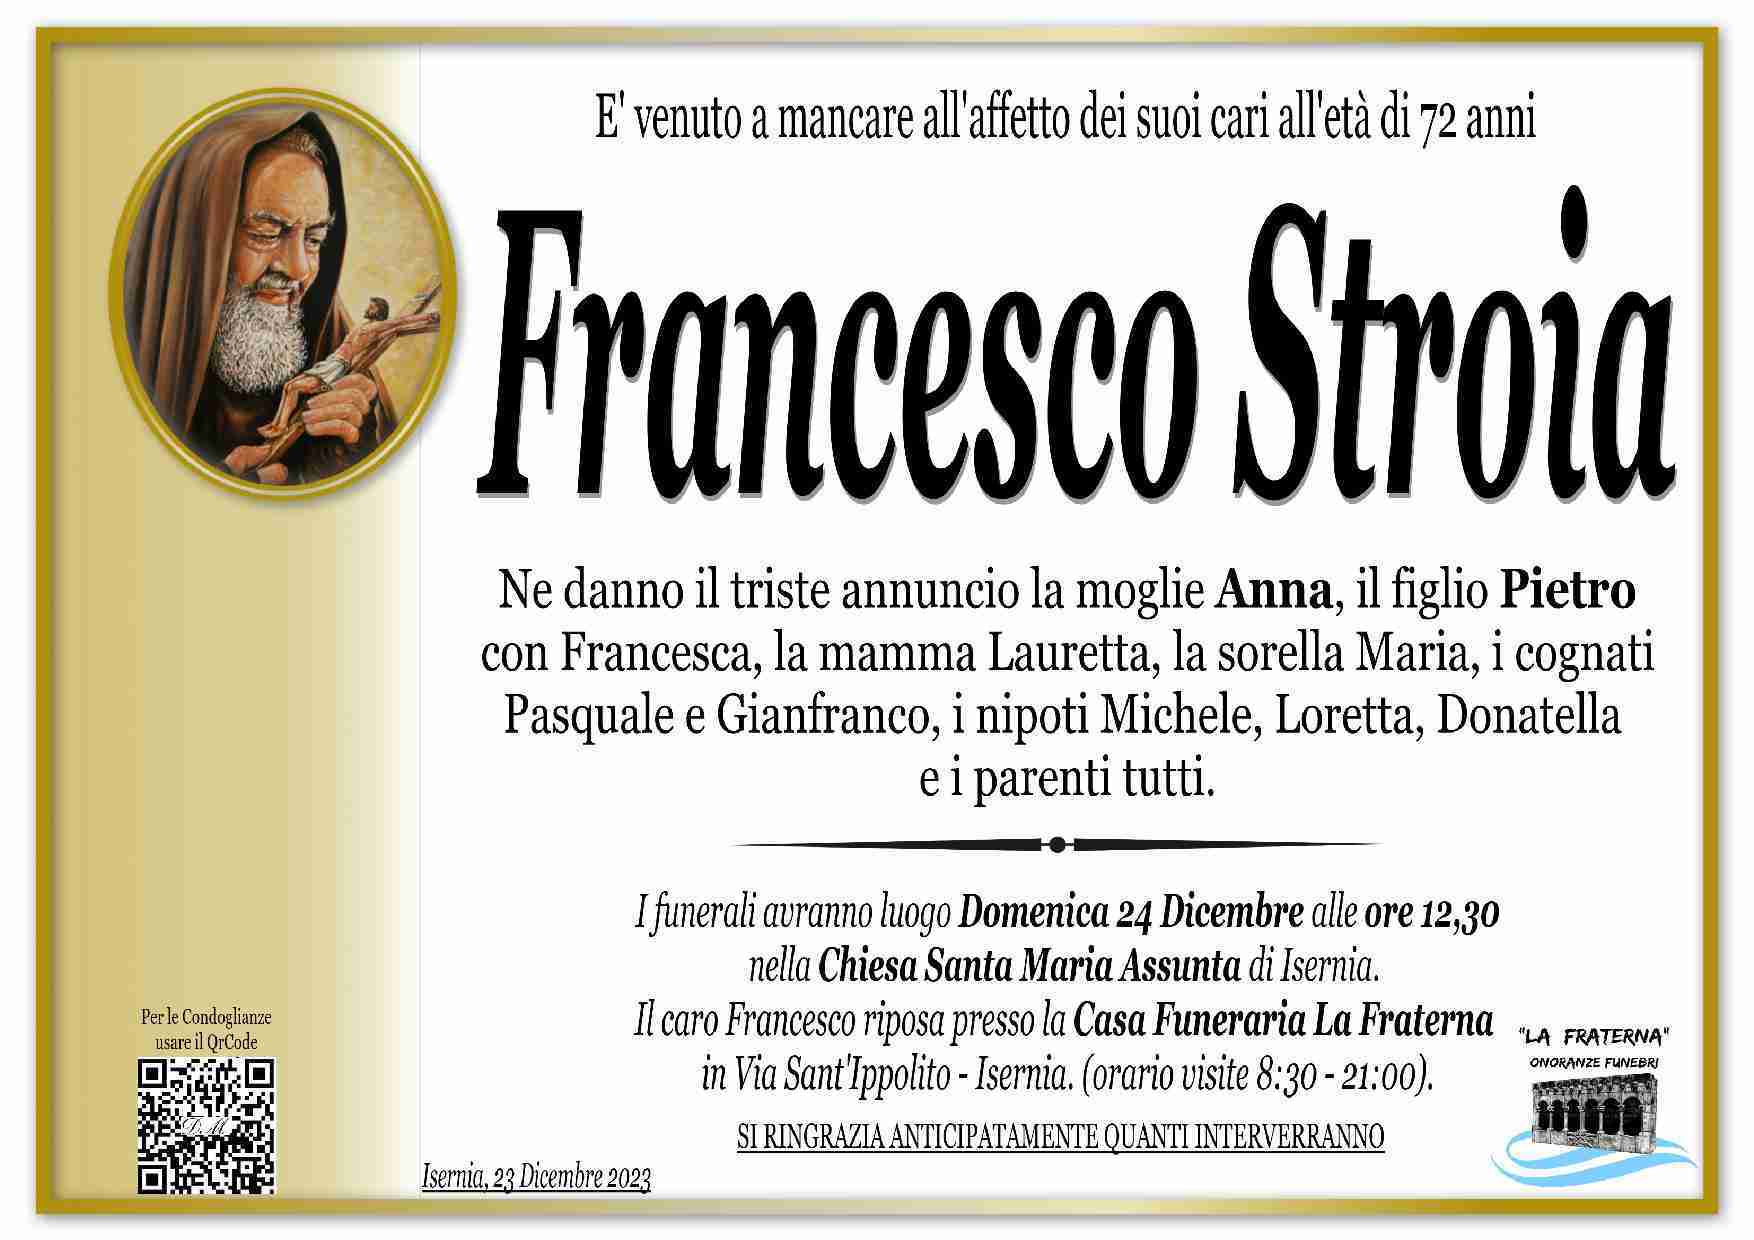 Francescantonio Stroia